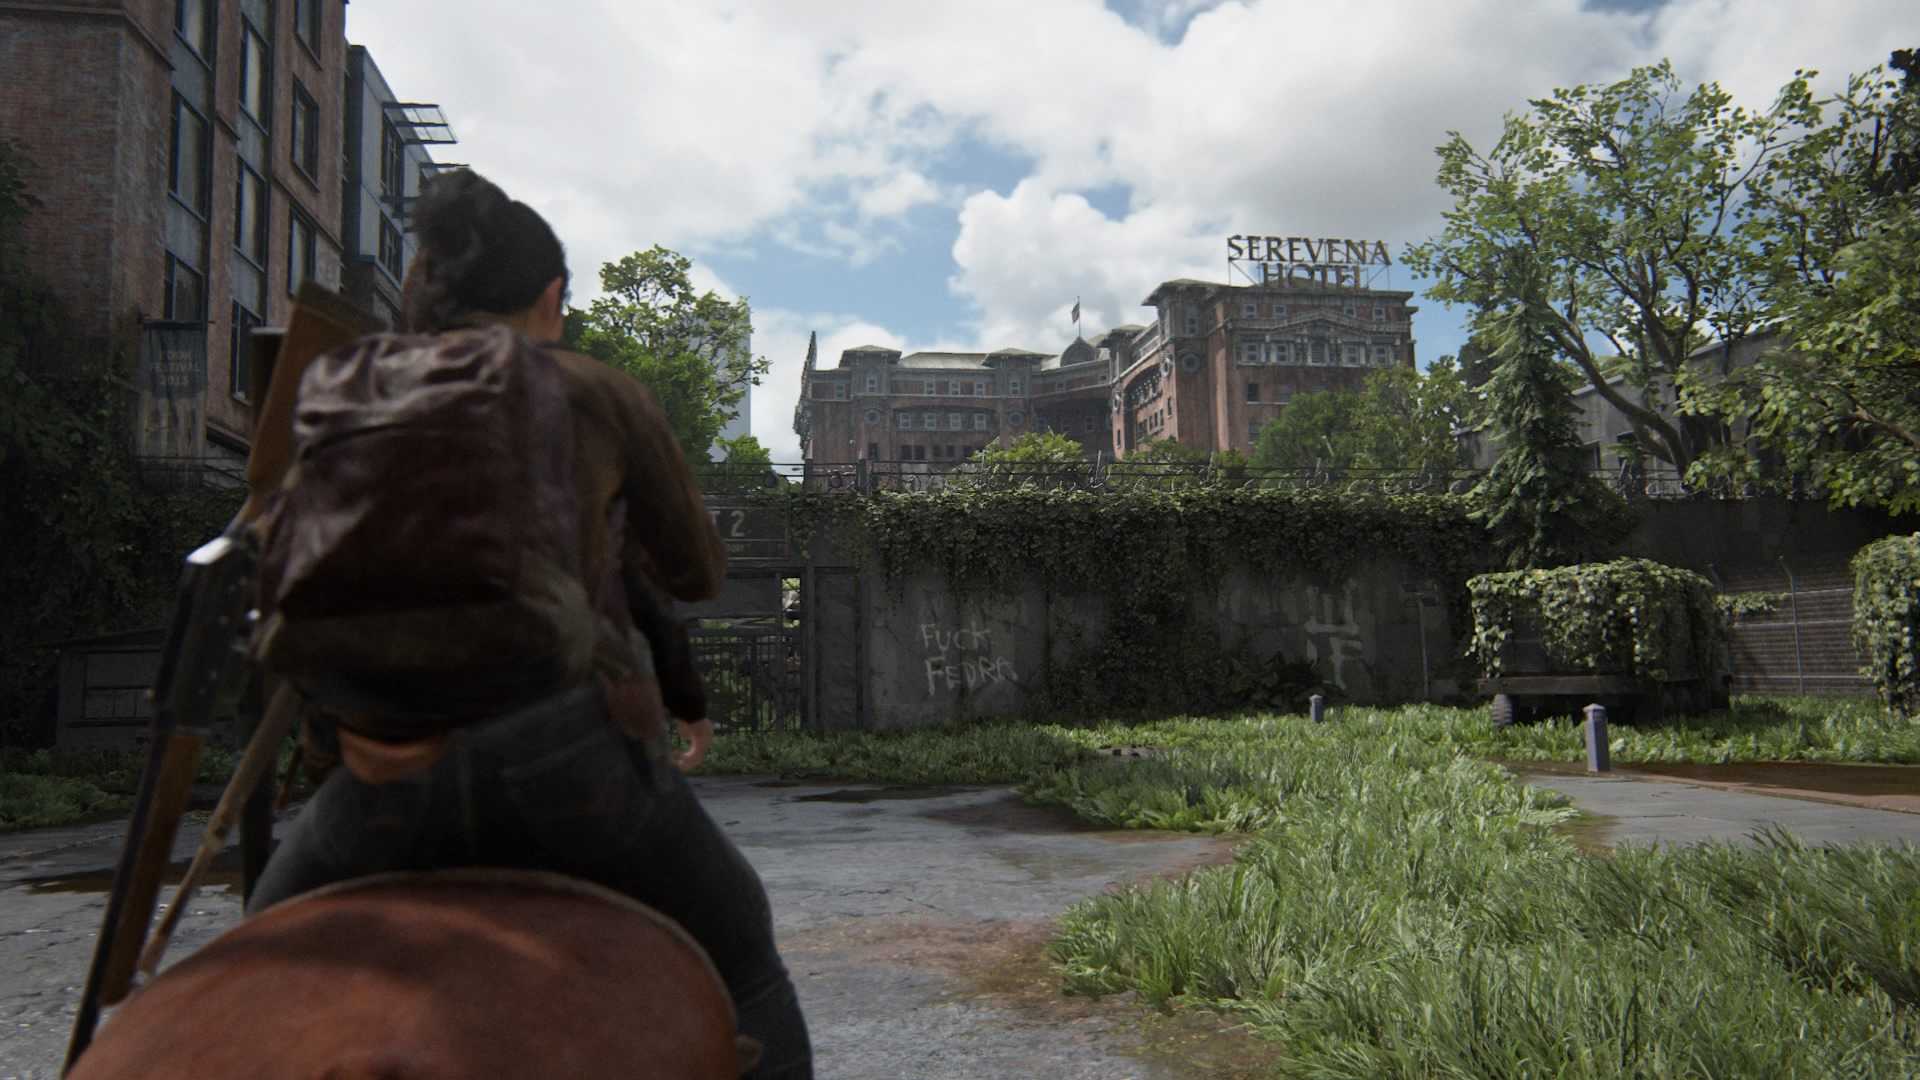 The Last of Us 2 Serevena Hotel horseback